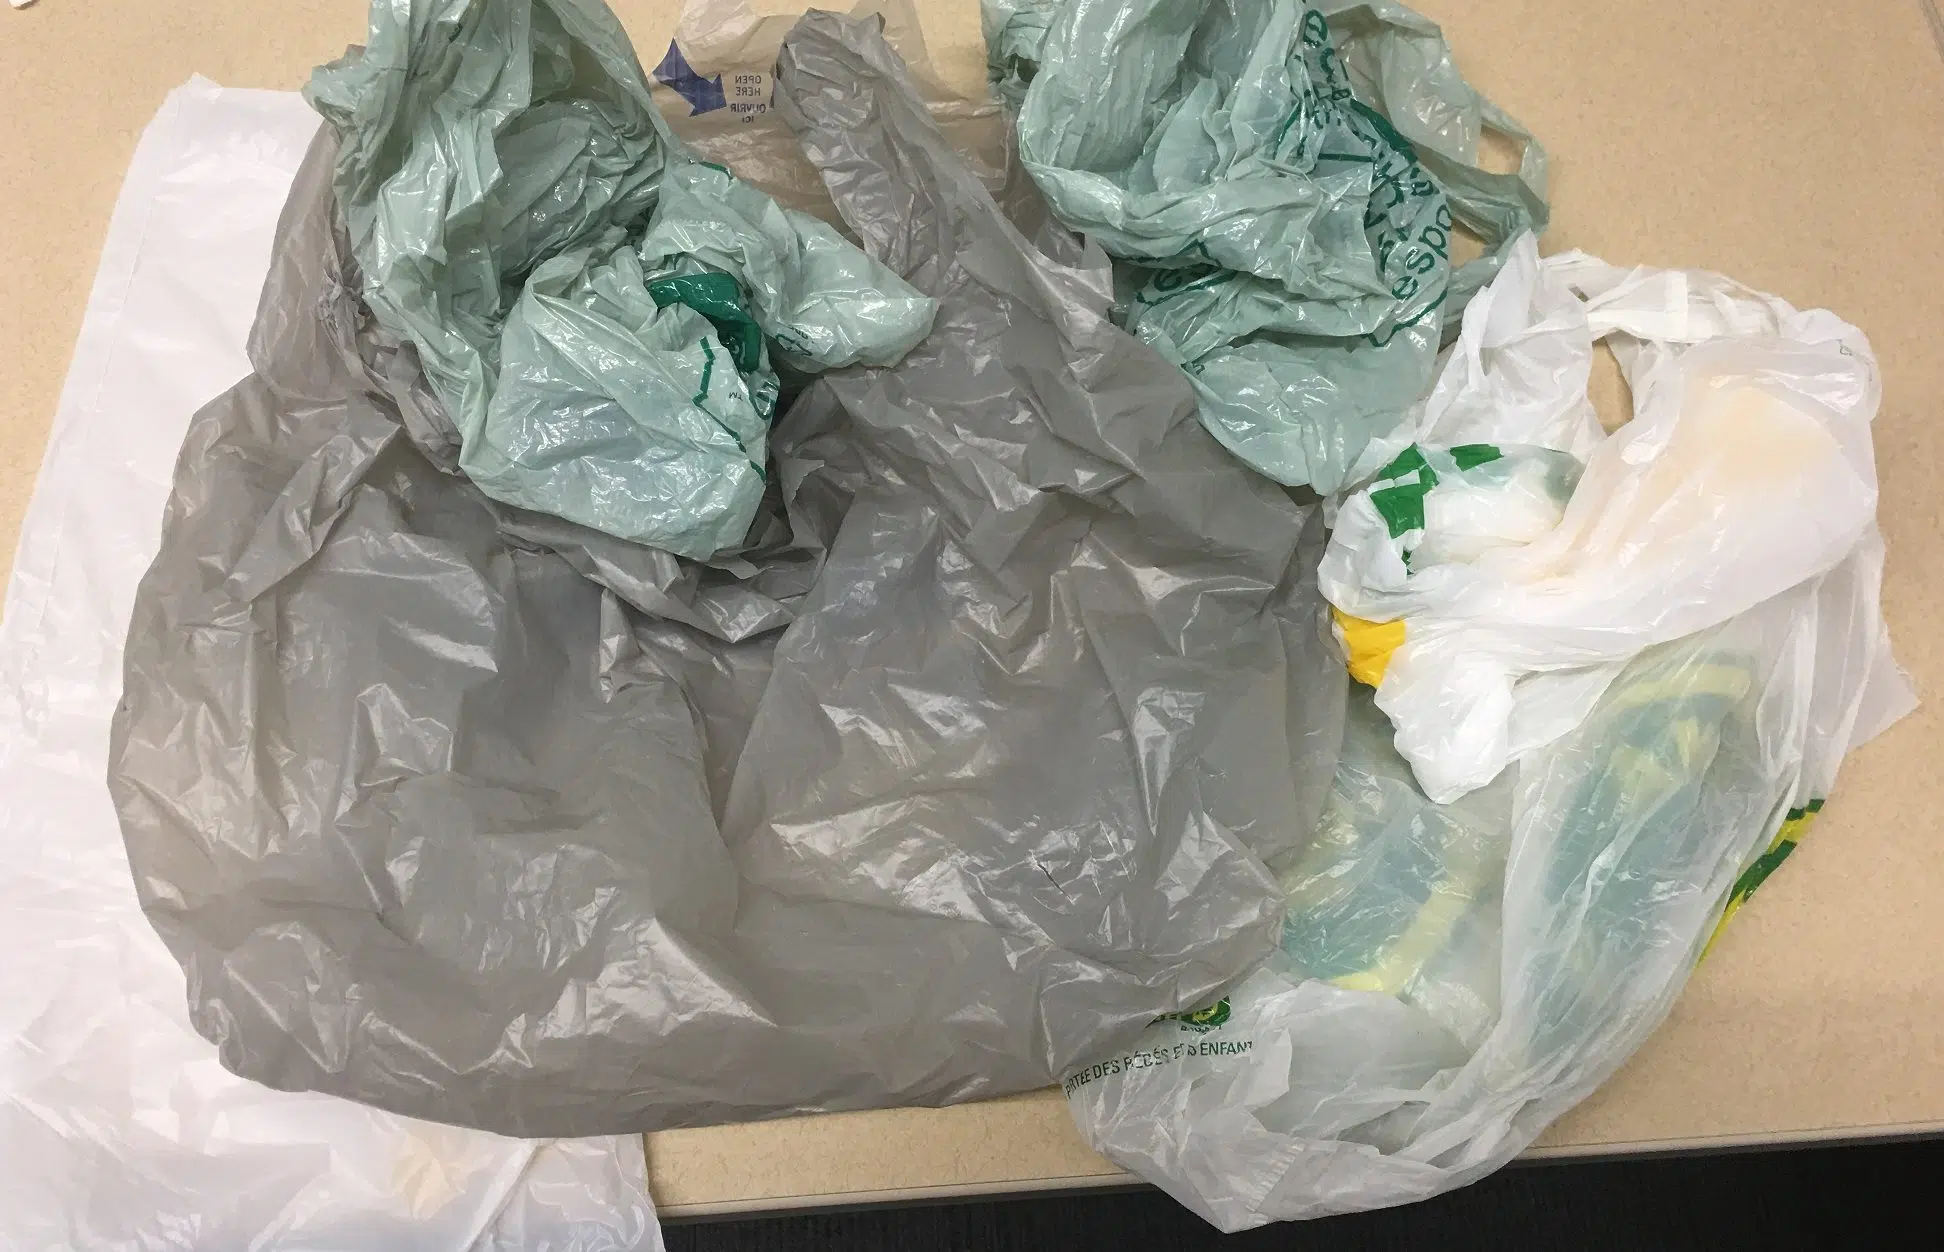 City Moves Toward Plastic Bag Ban